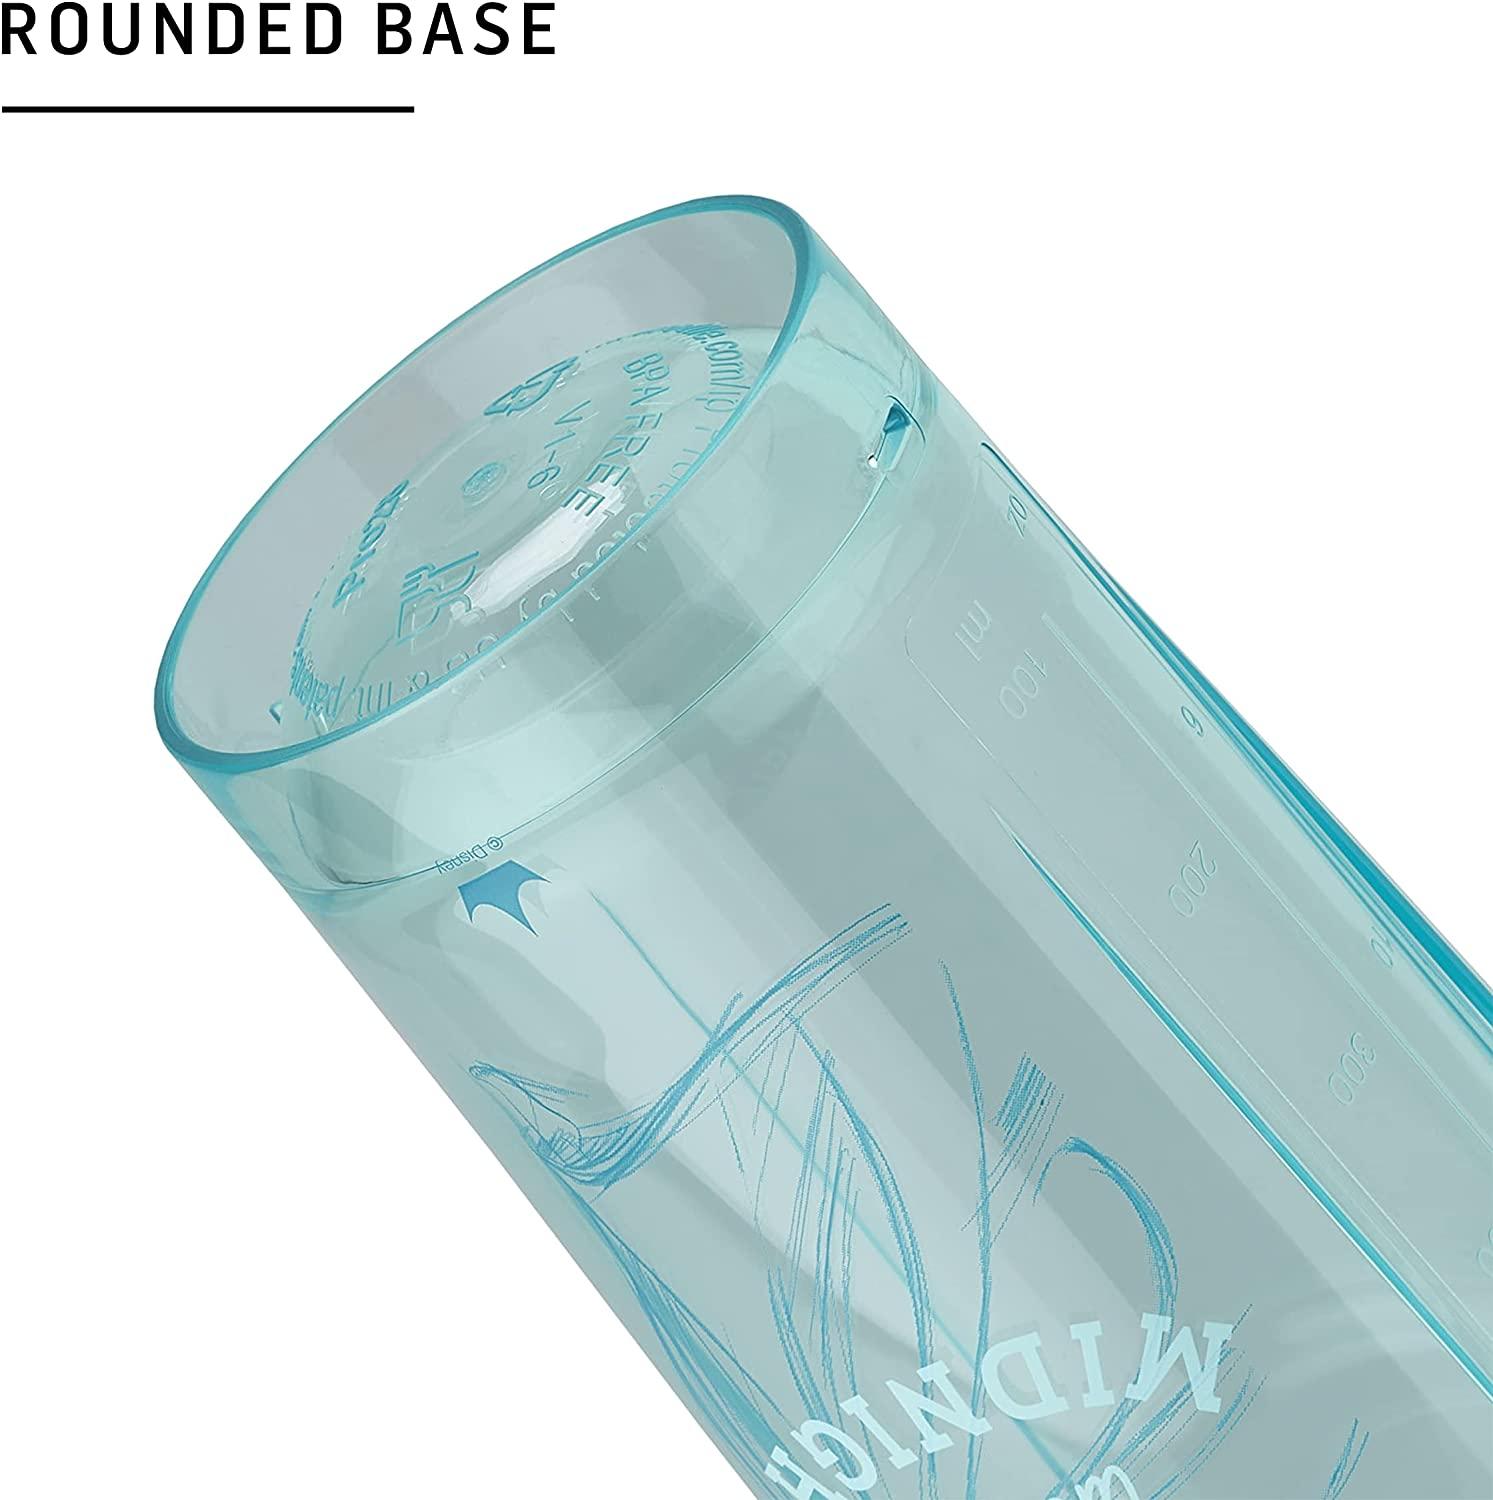 Blender Bottle Disney Princess - Pro Series Shaker Cup - I'll Pump